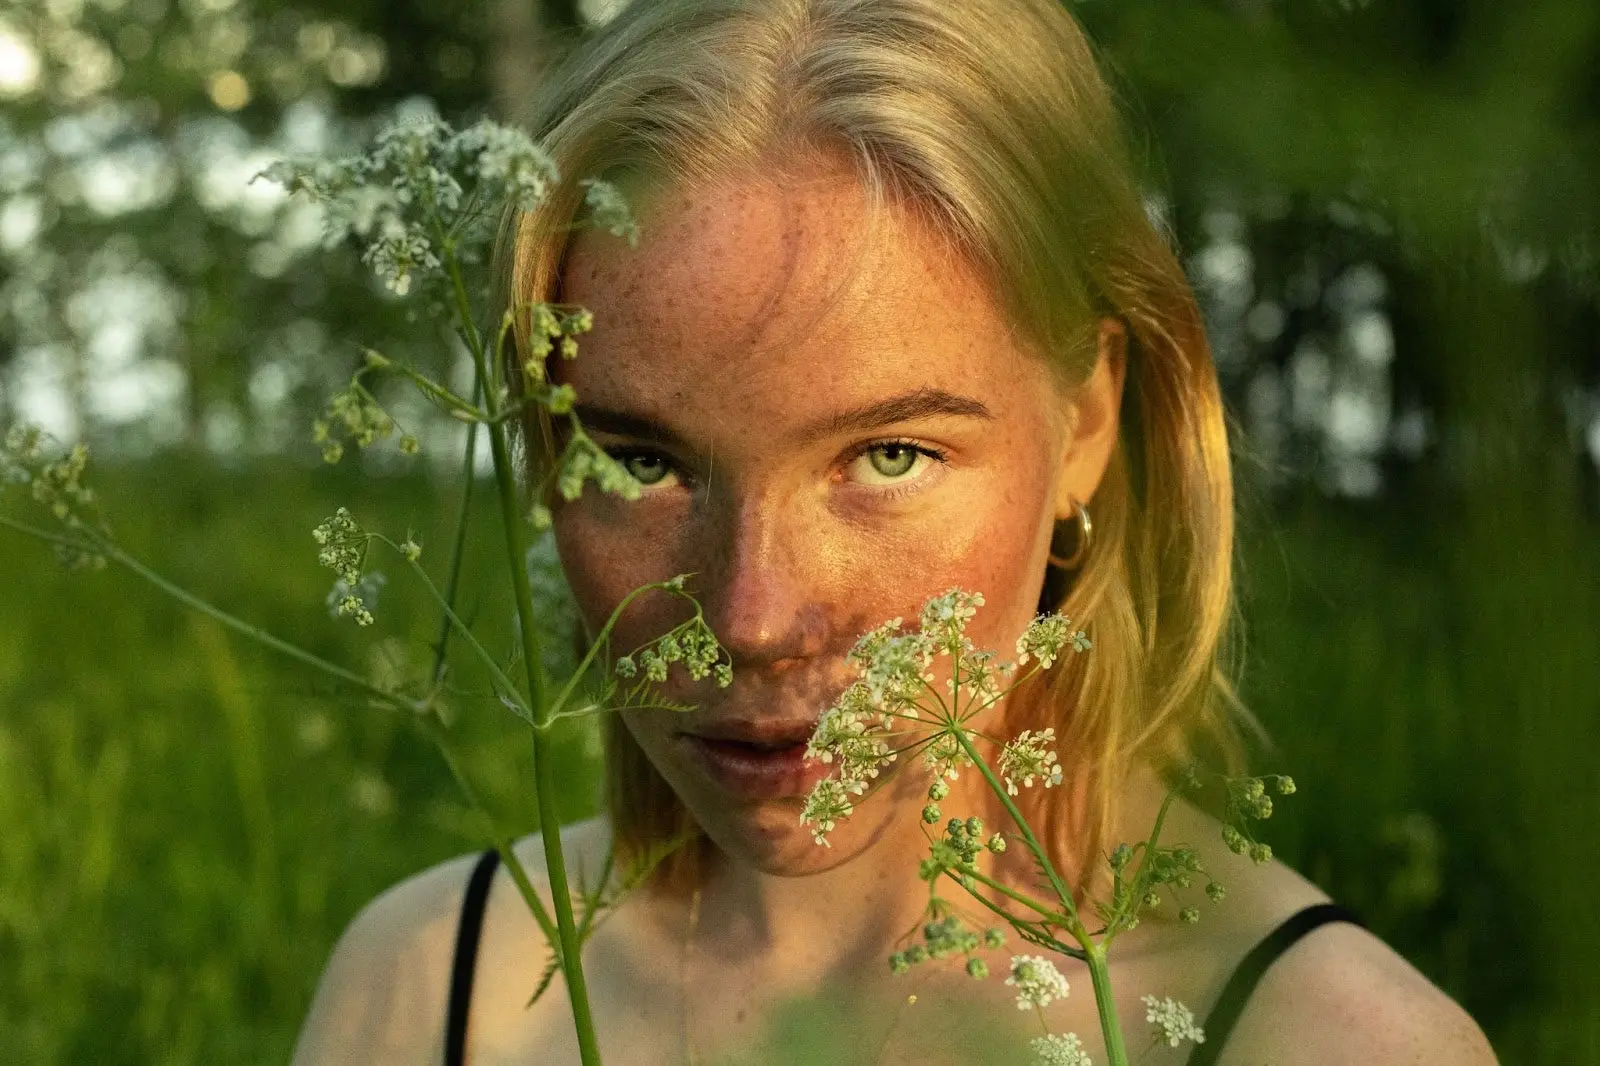 Image featuring the Finnish model Nea Hassinen. 